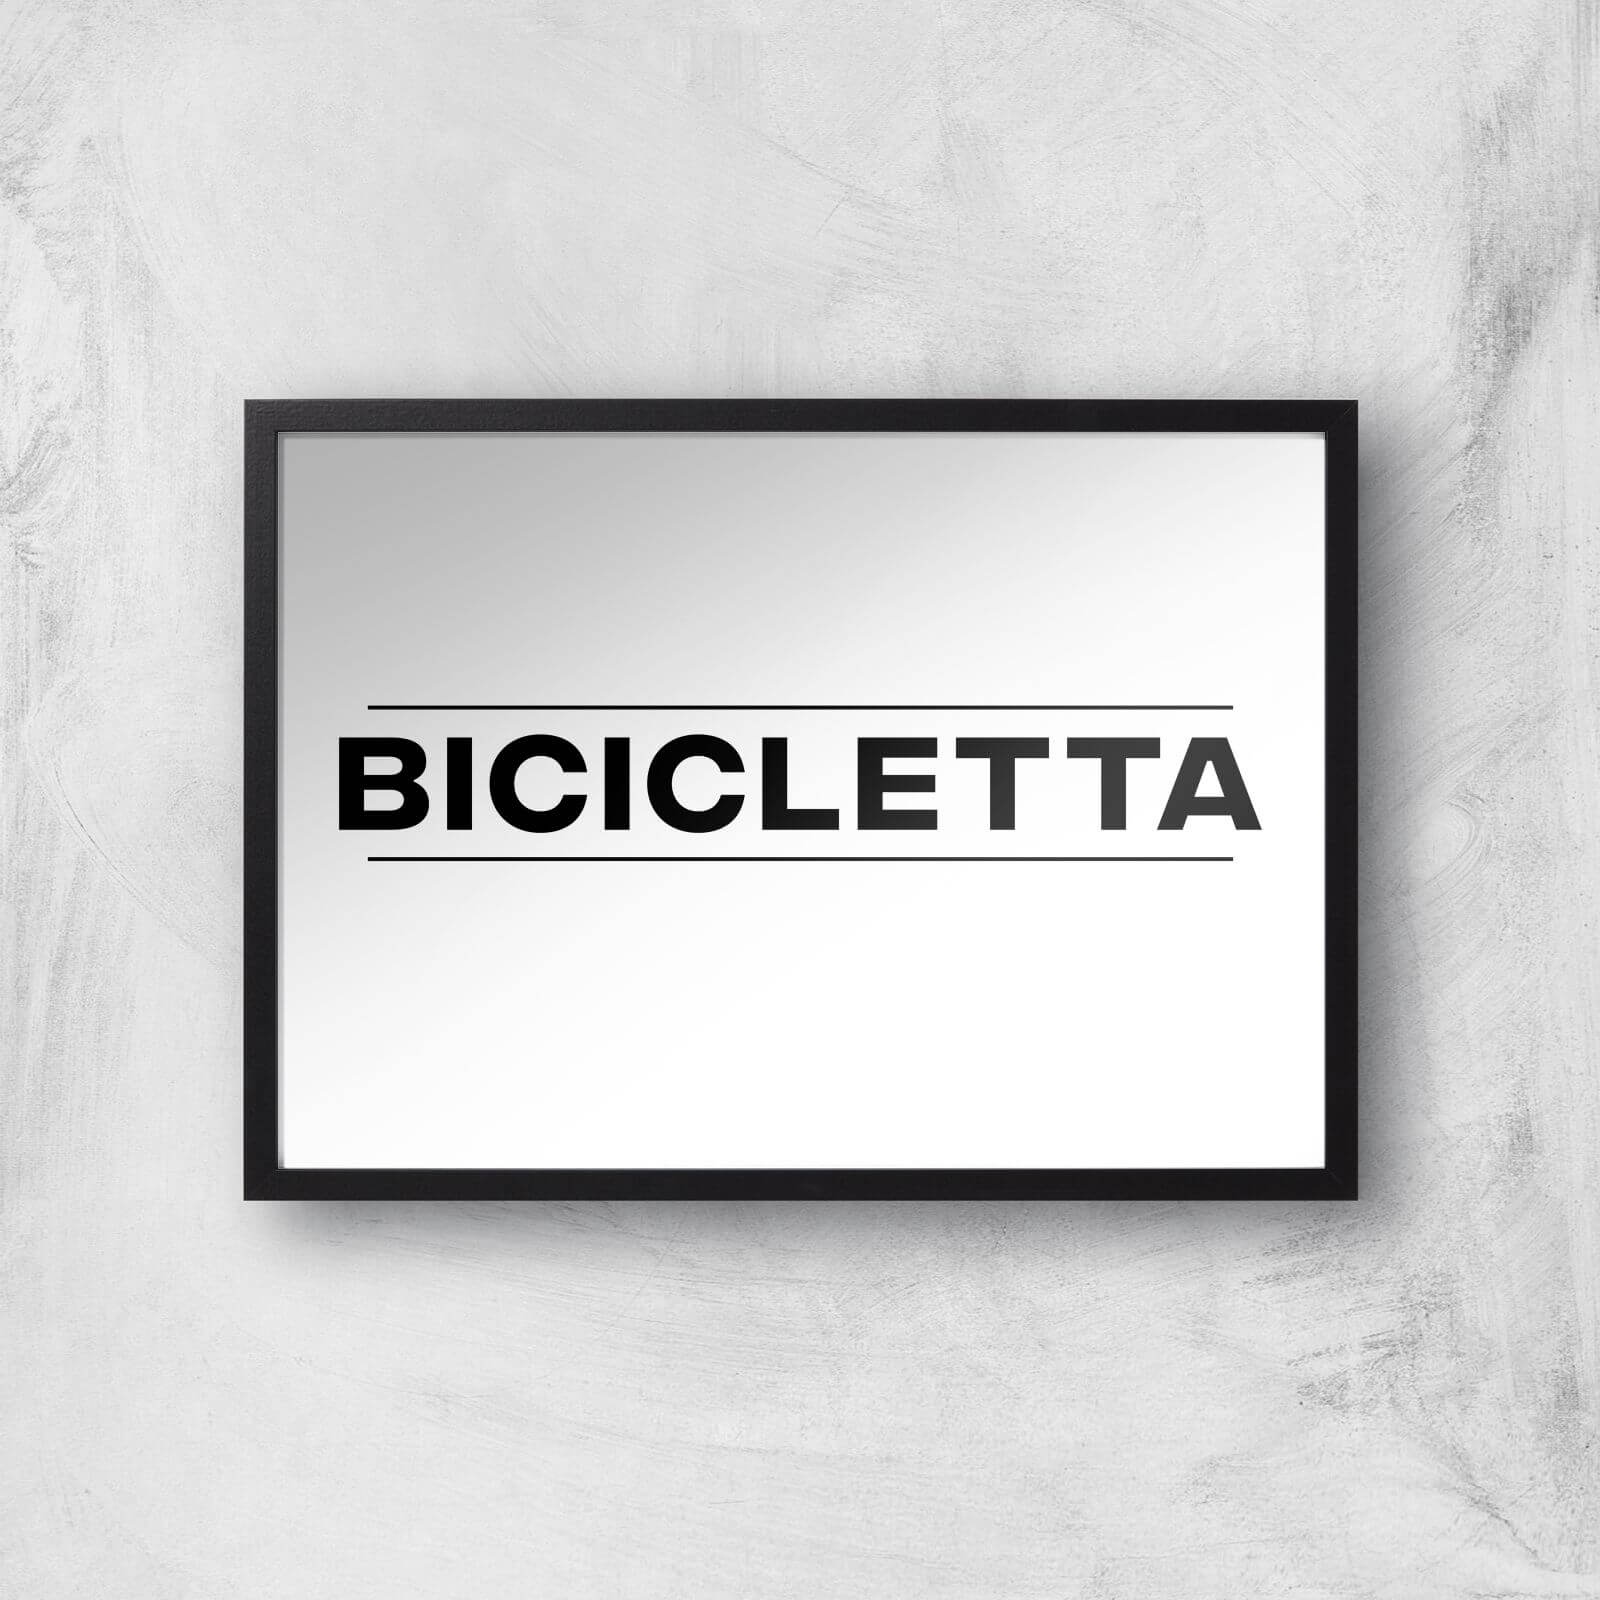 PBK Bicicletta Giclee Art Print - A4 - White Frame